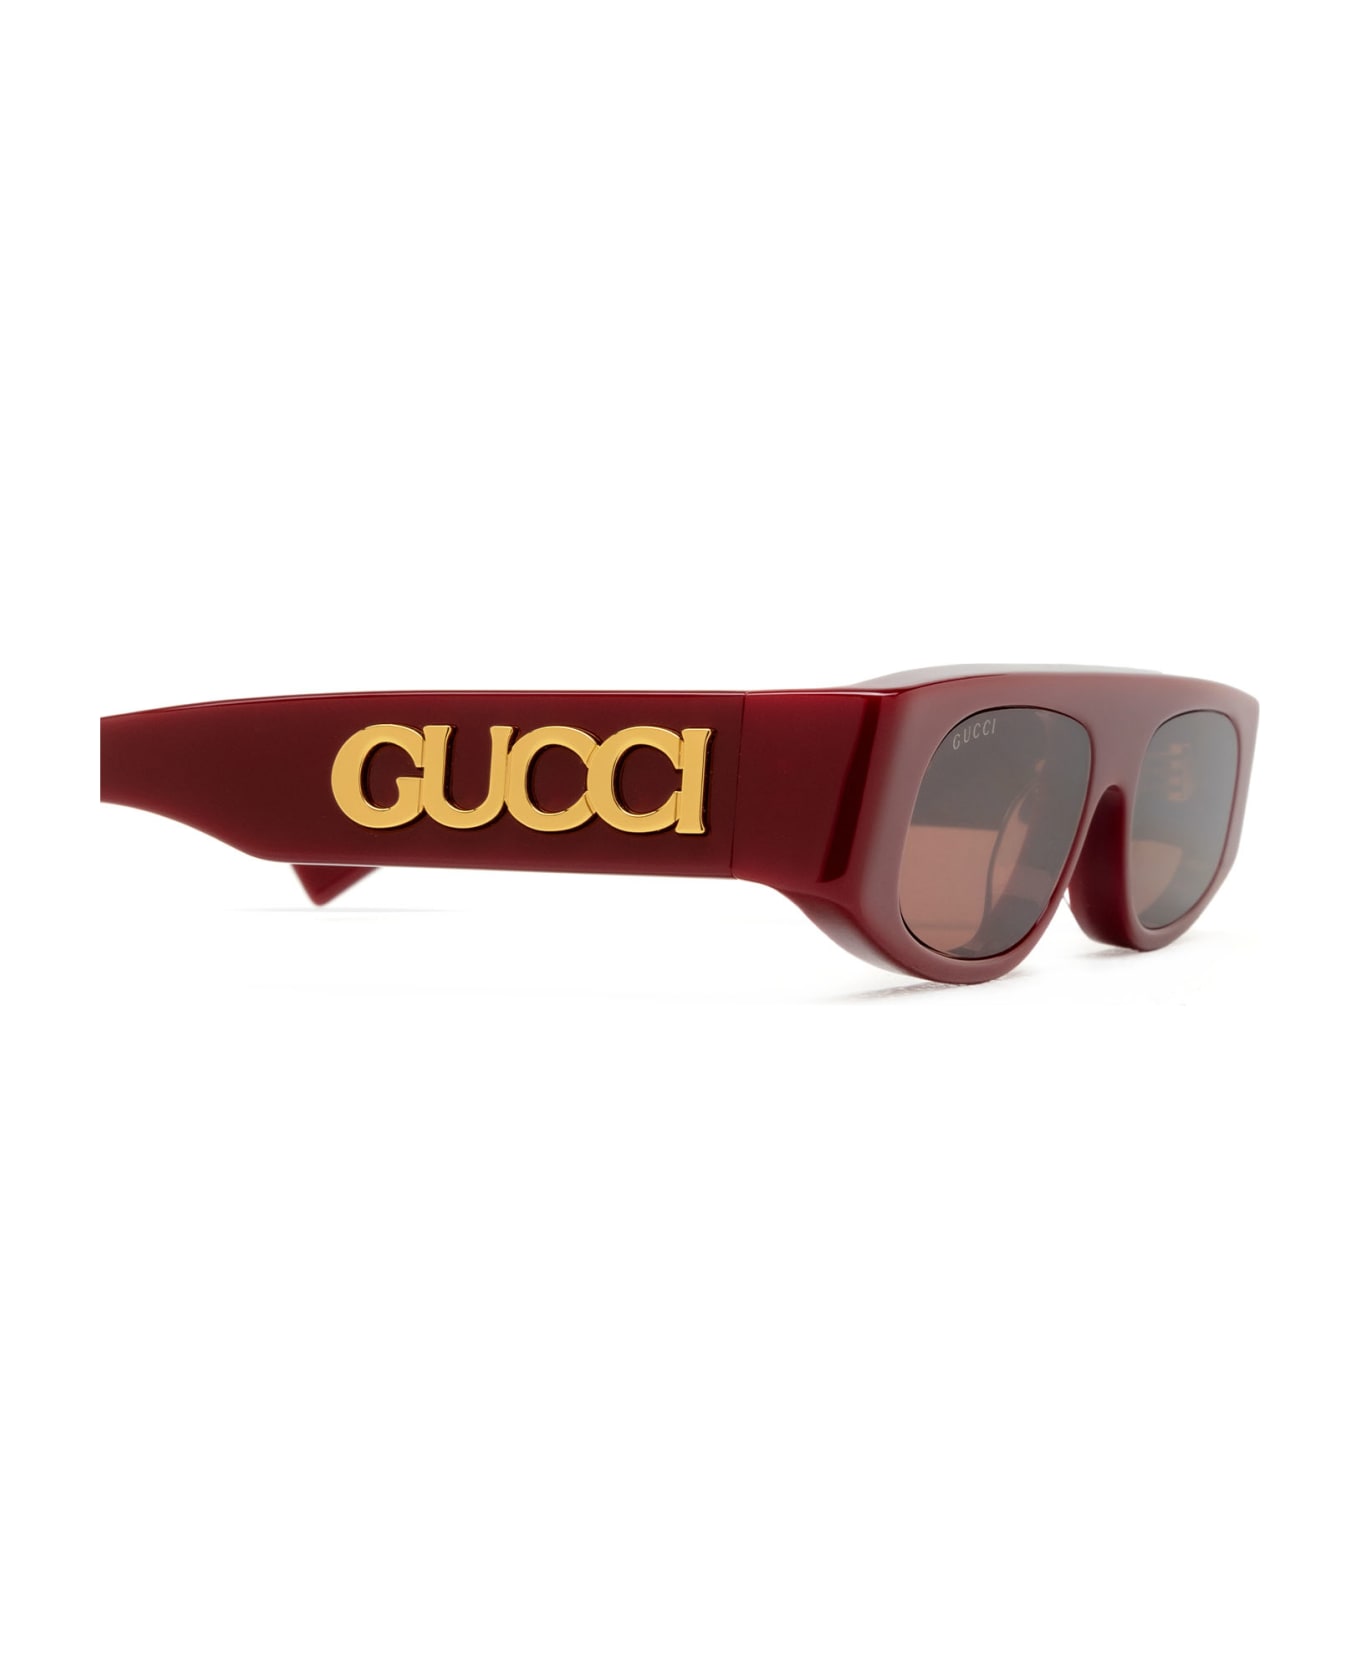 Gucci Eyewear Gg1771s Burgundy Sunglasses - Burgundy